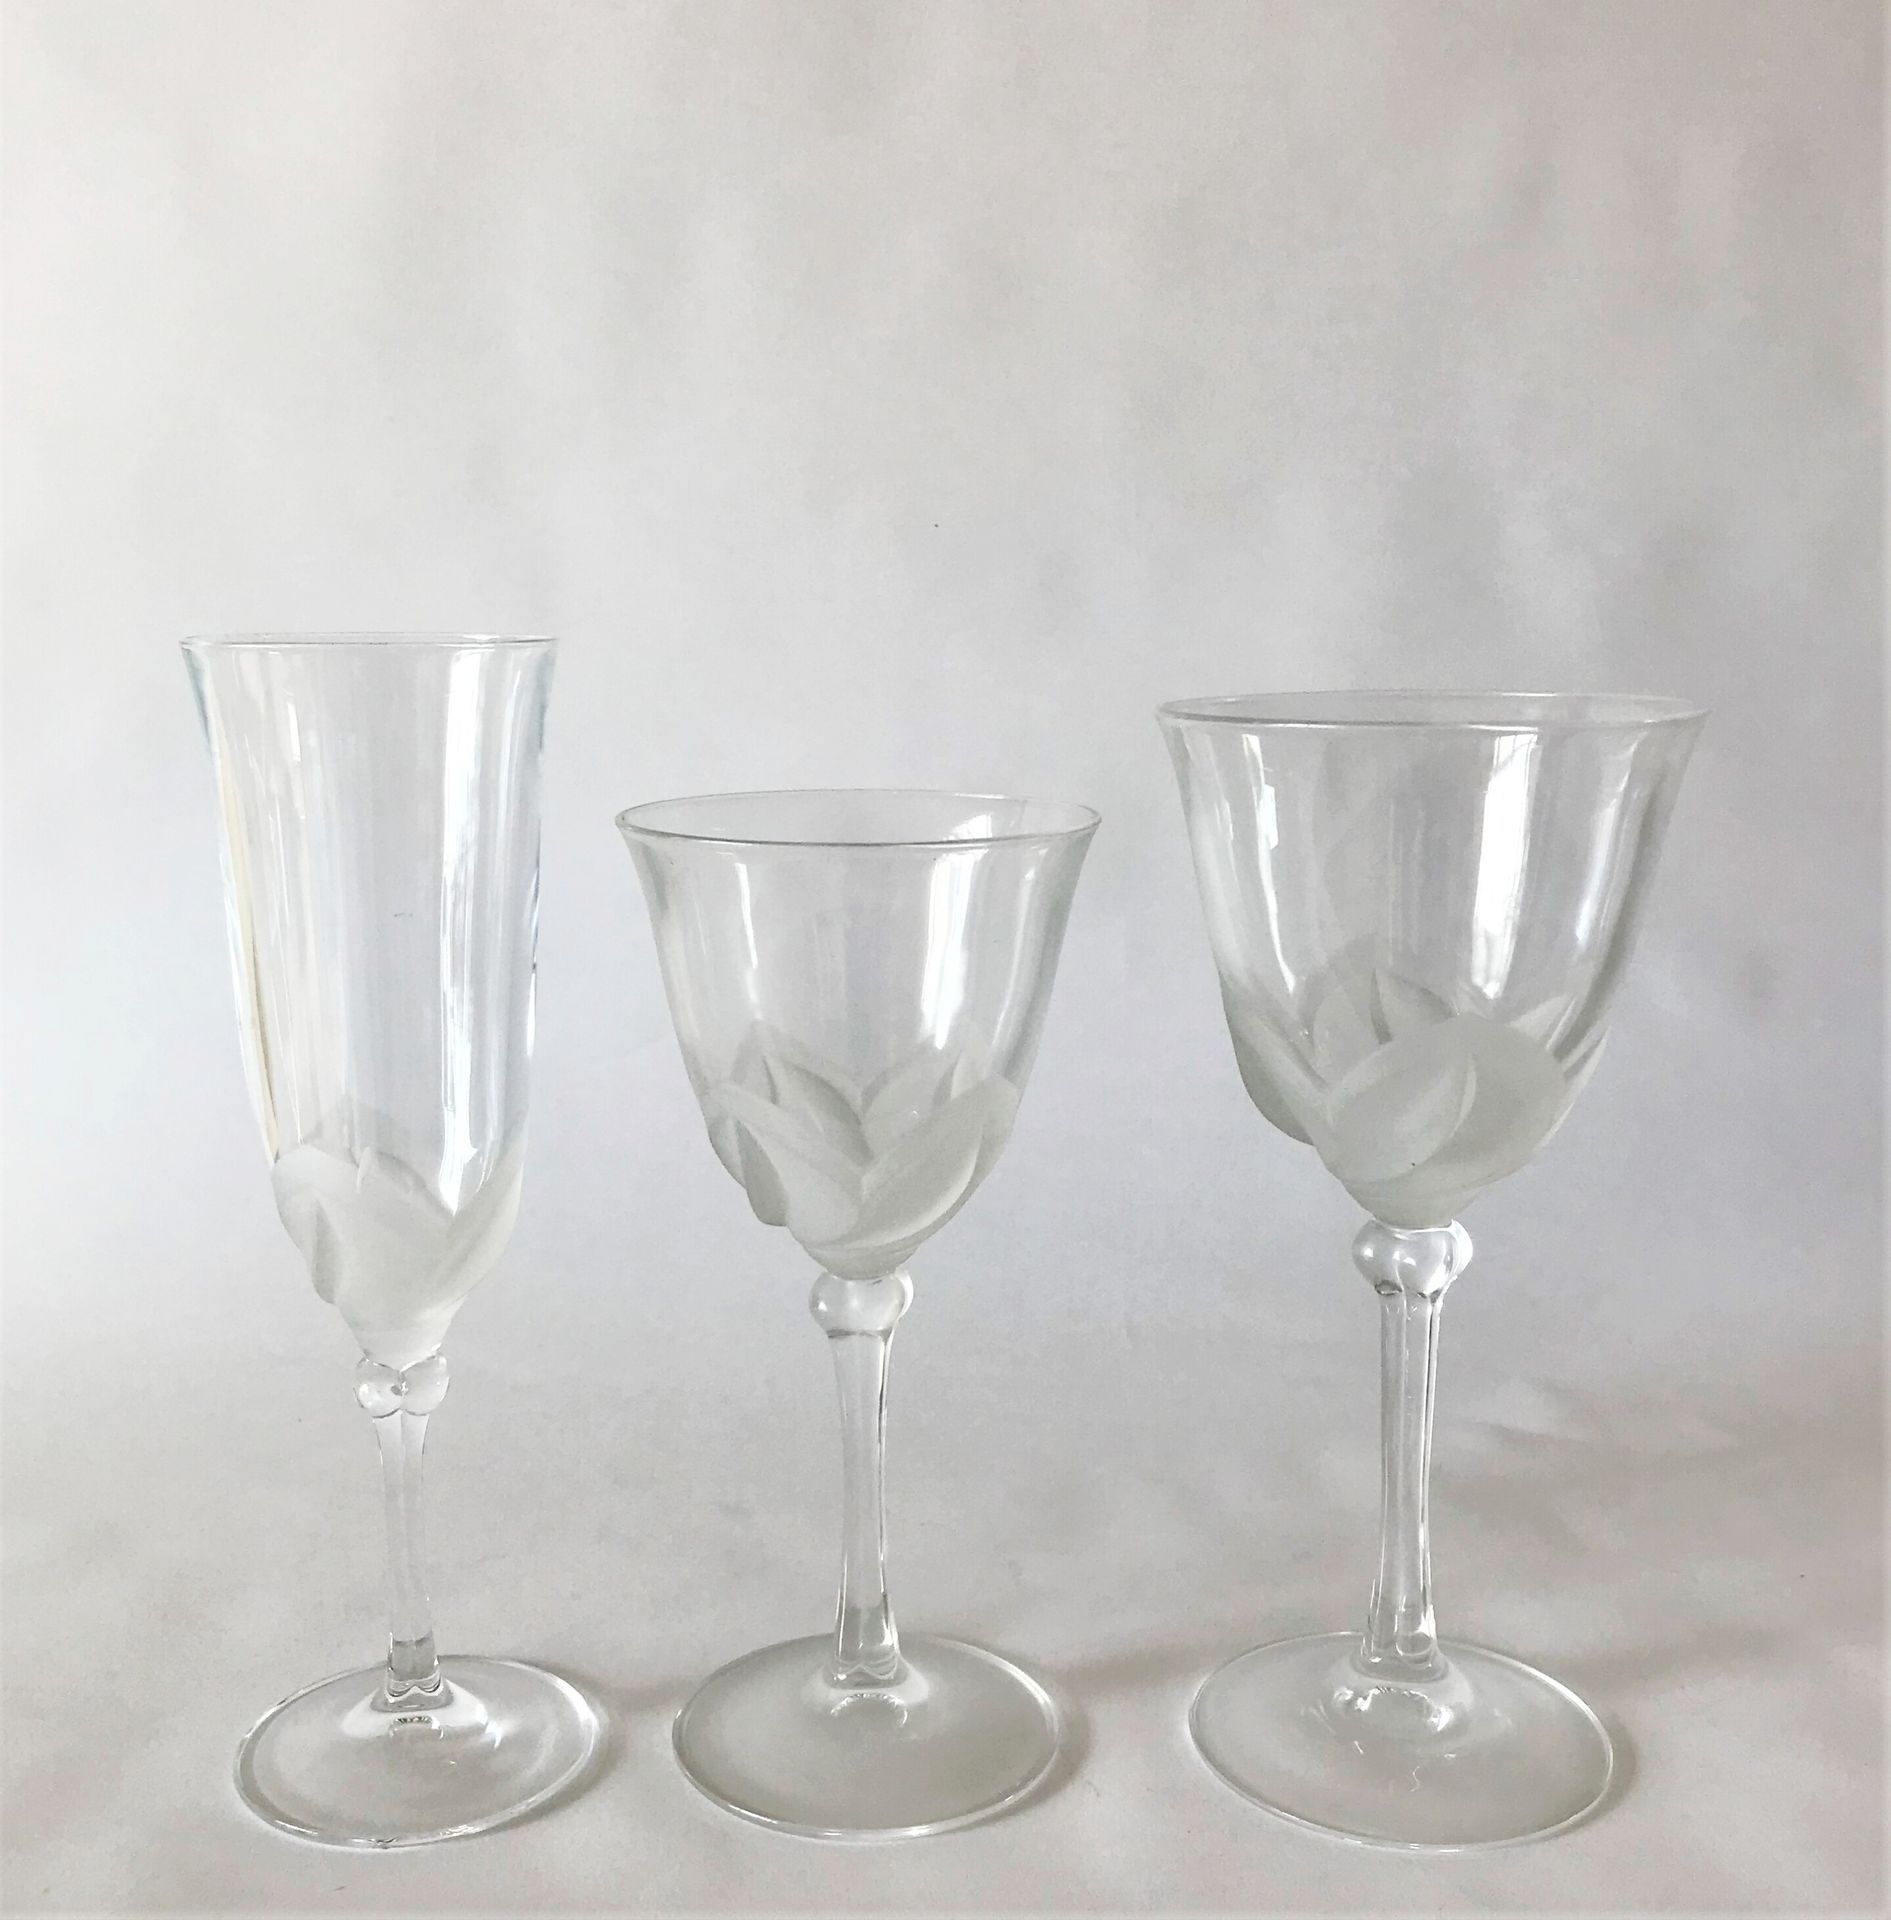 LALIQUE 制造LALIQUE的味道

8只大杯、2只小杯和3只浮雕叶子乳白色装饰水晶杯组